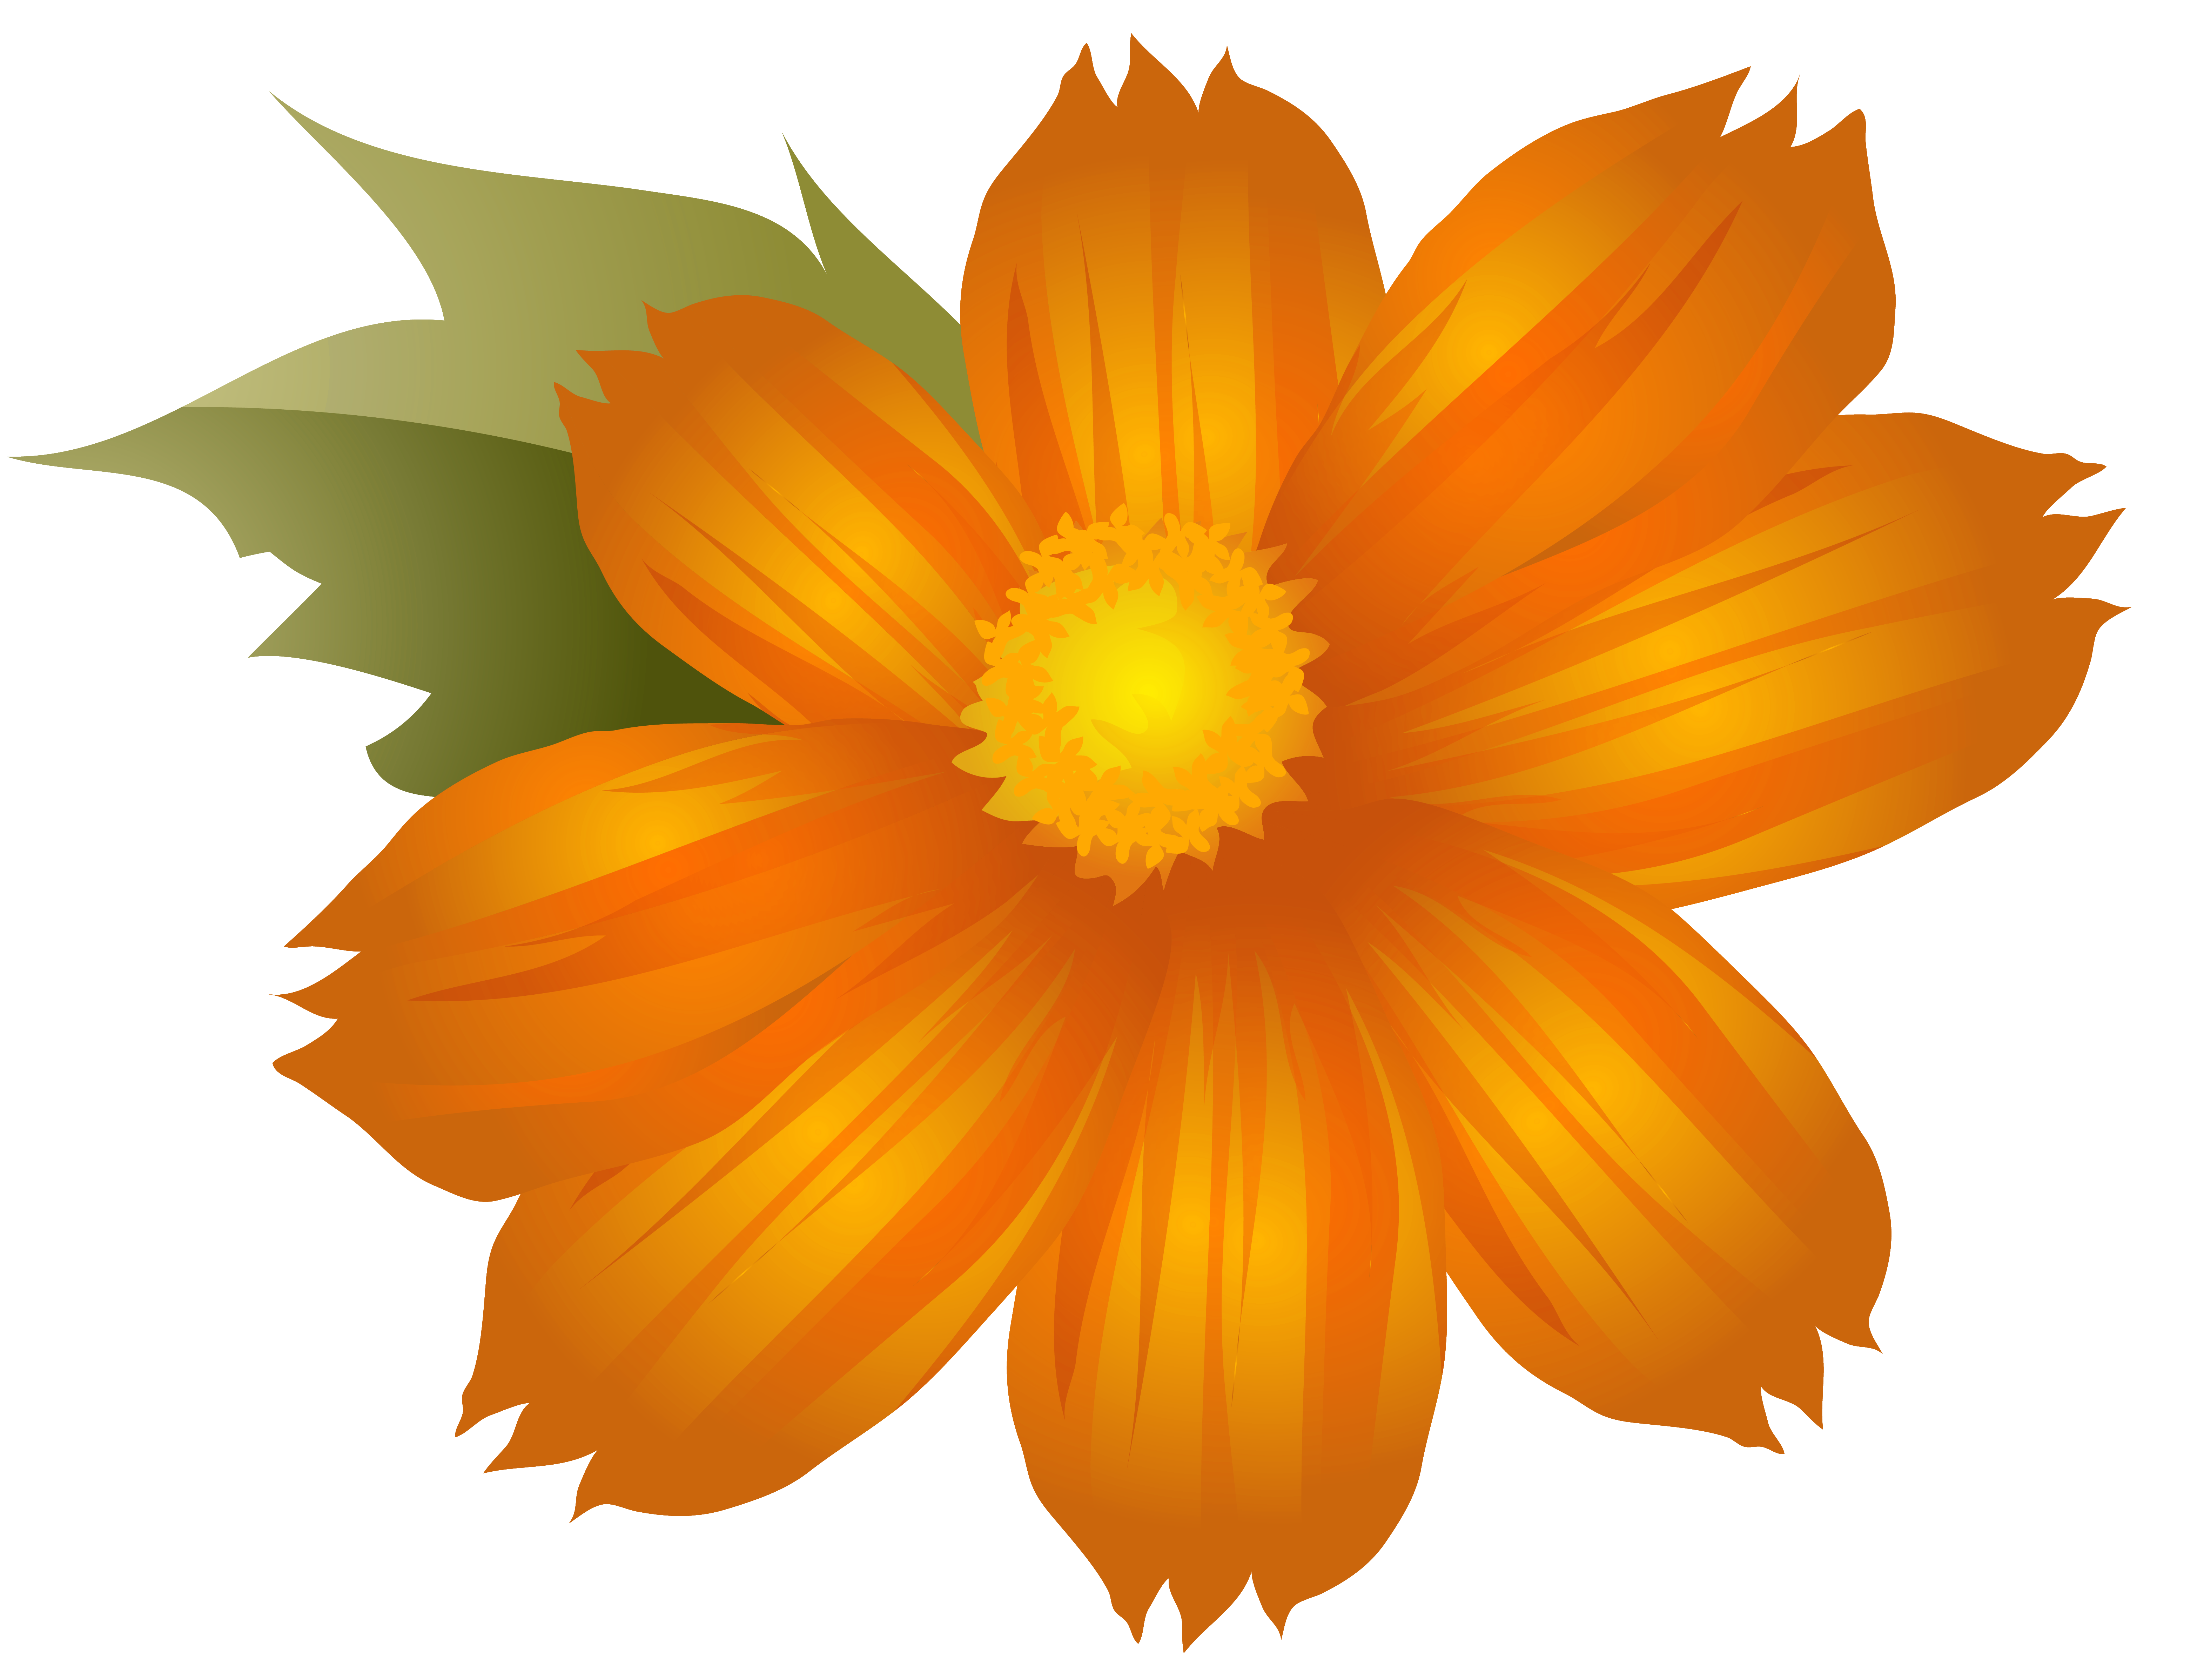 Orange Flower PNG Clip-Art Image | Gallery Yopriceville - High ...